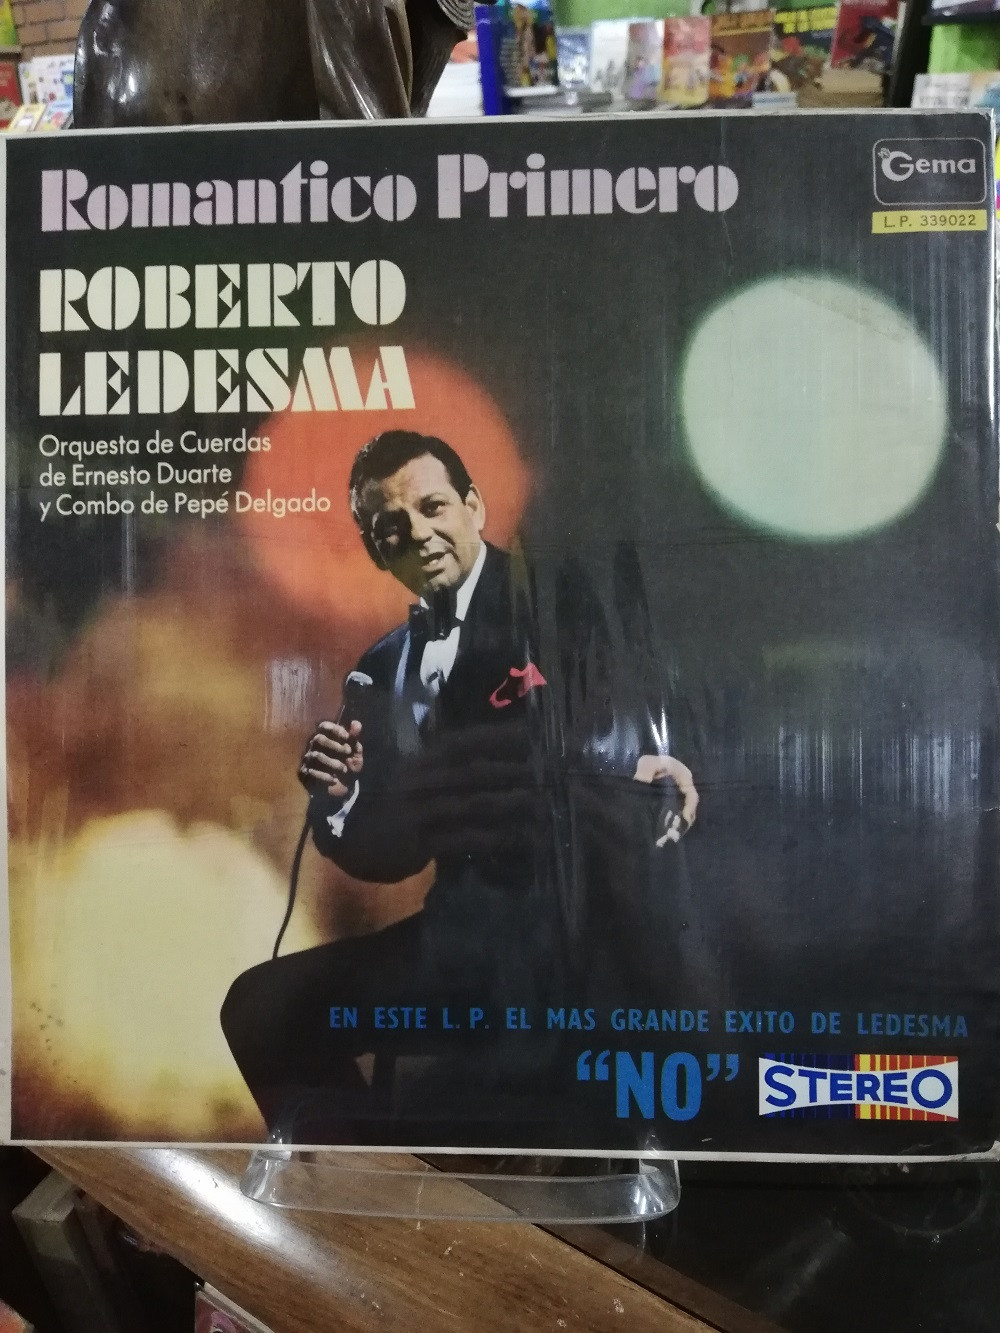 Imagen LP ROBERTO LEDESMA - ROMANTICO PRIMERO